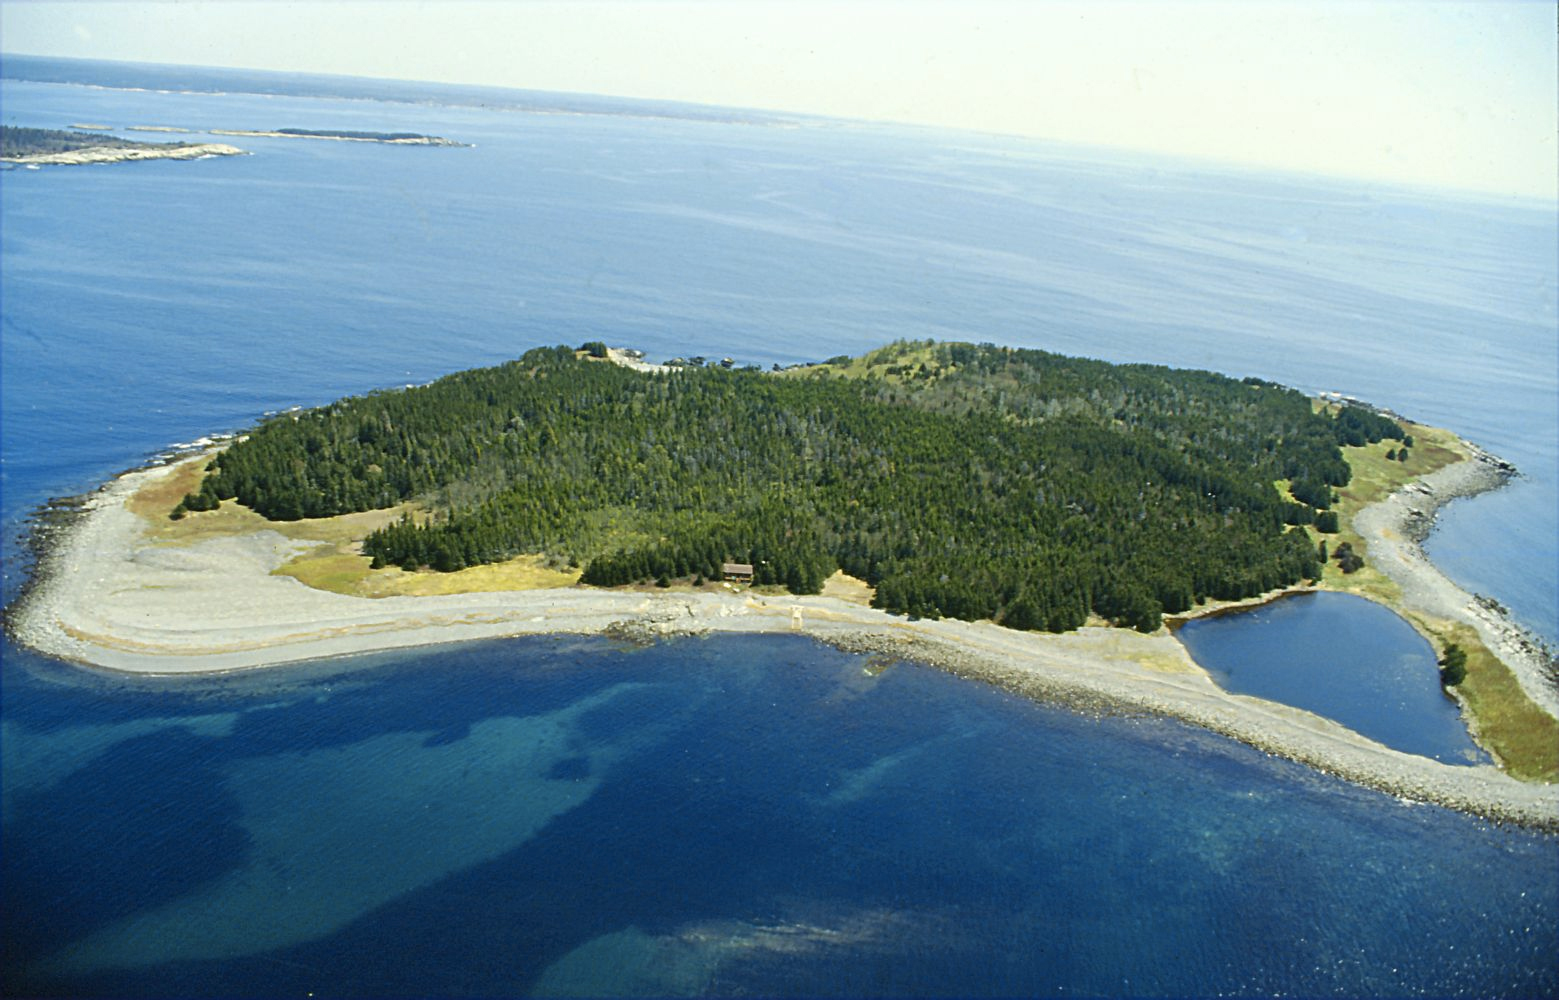 Gravel Island off the coast of Nova Scotia, Canada